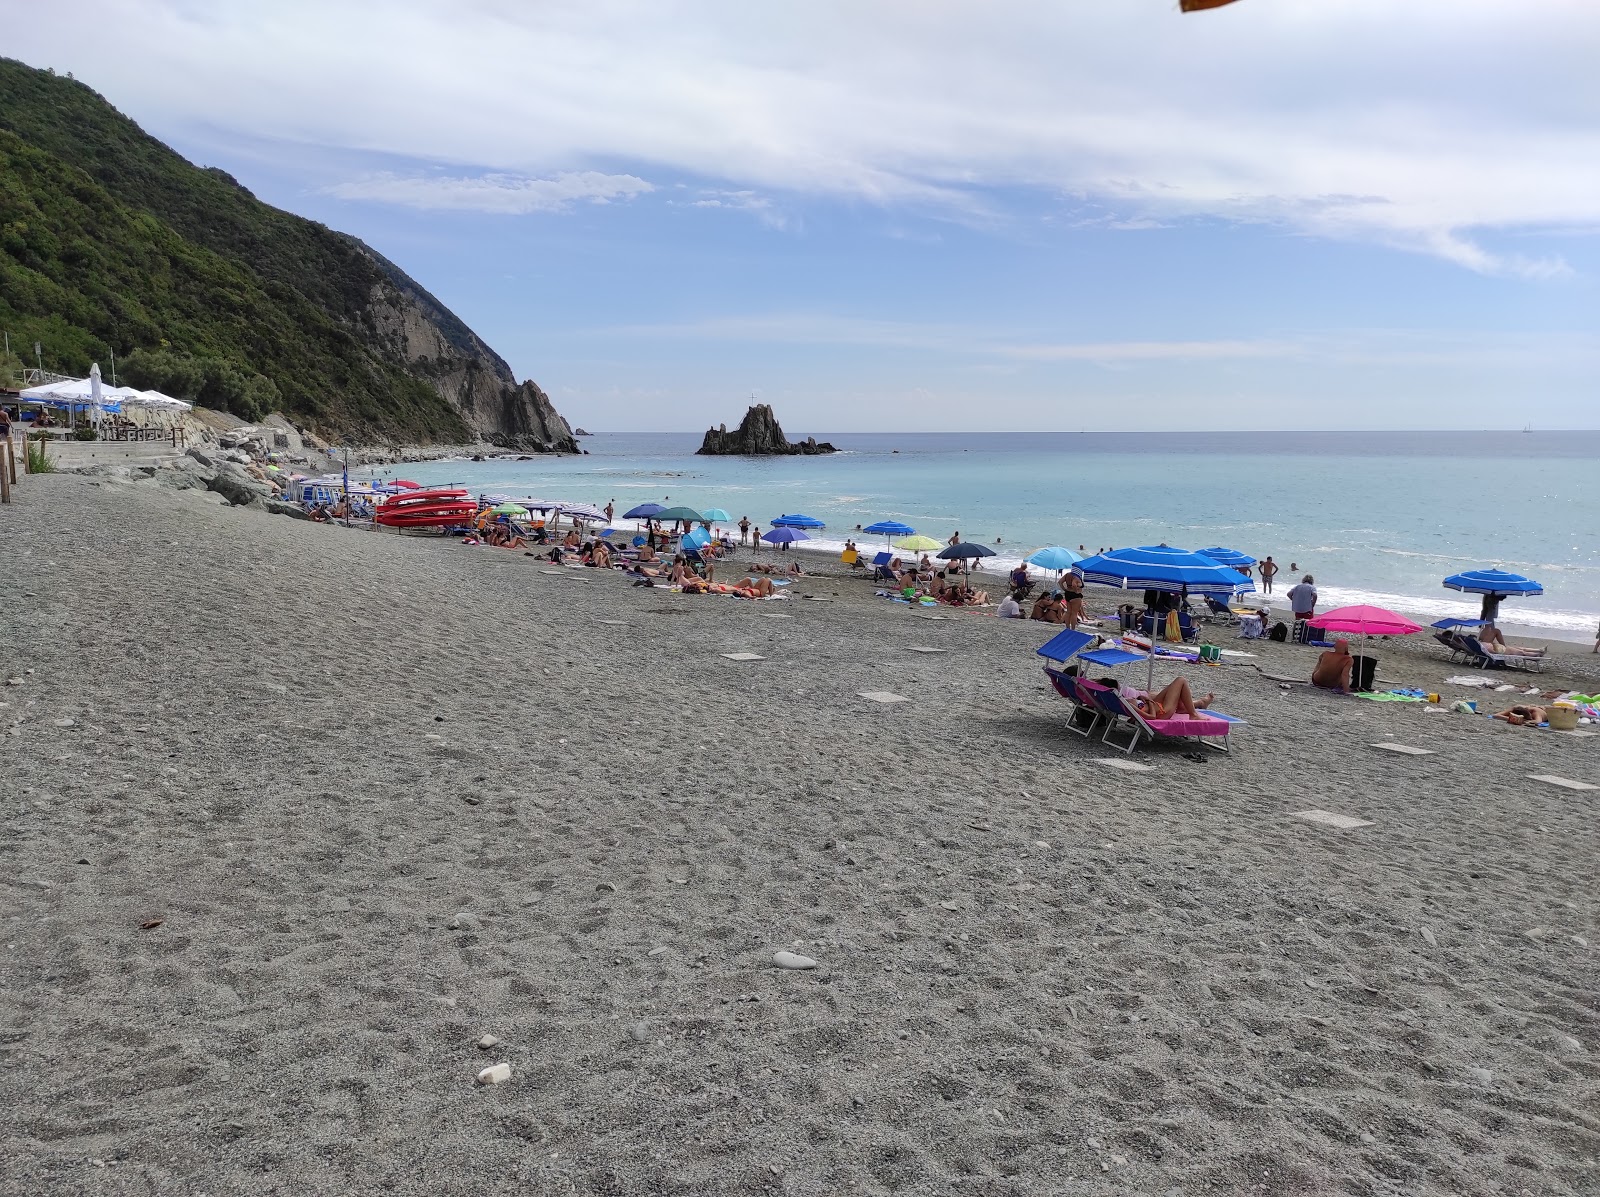 Spiaggia Riva Trigoso'in fotoğrafı doğrudan plaj ile birlikte